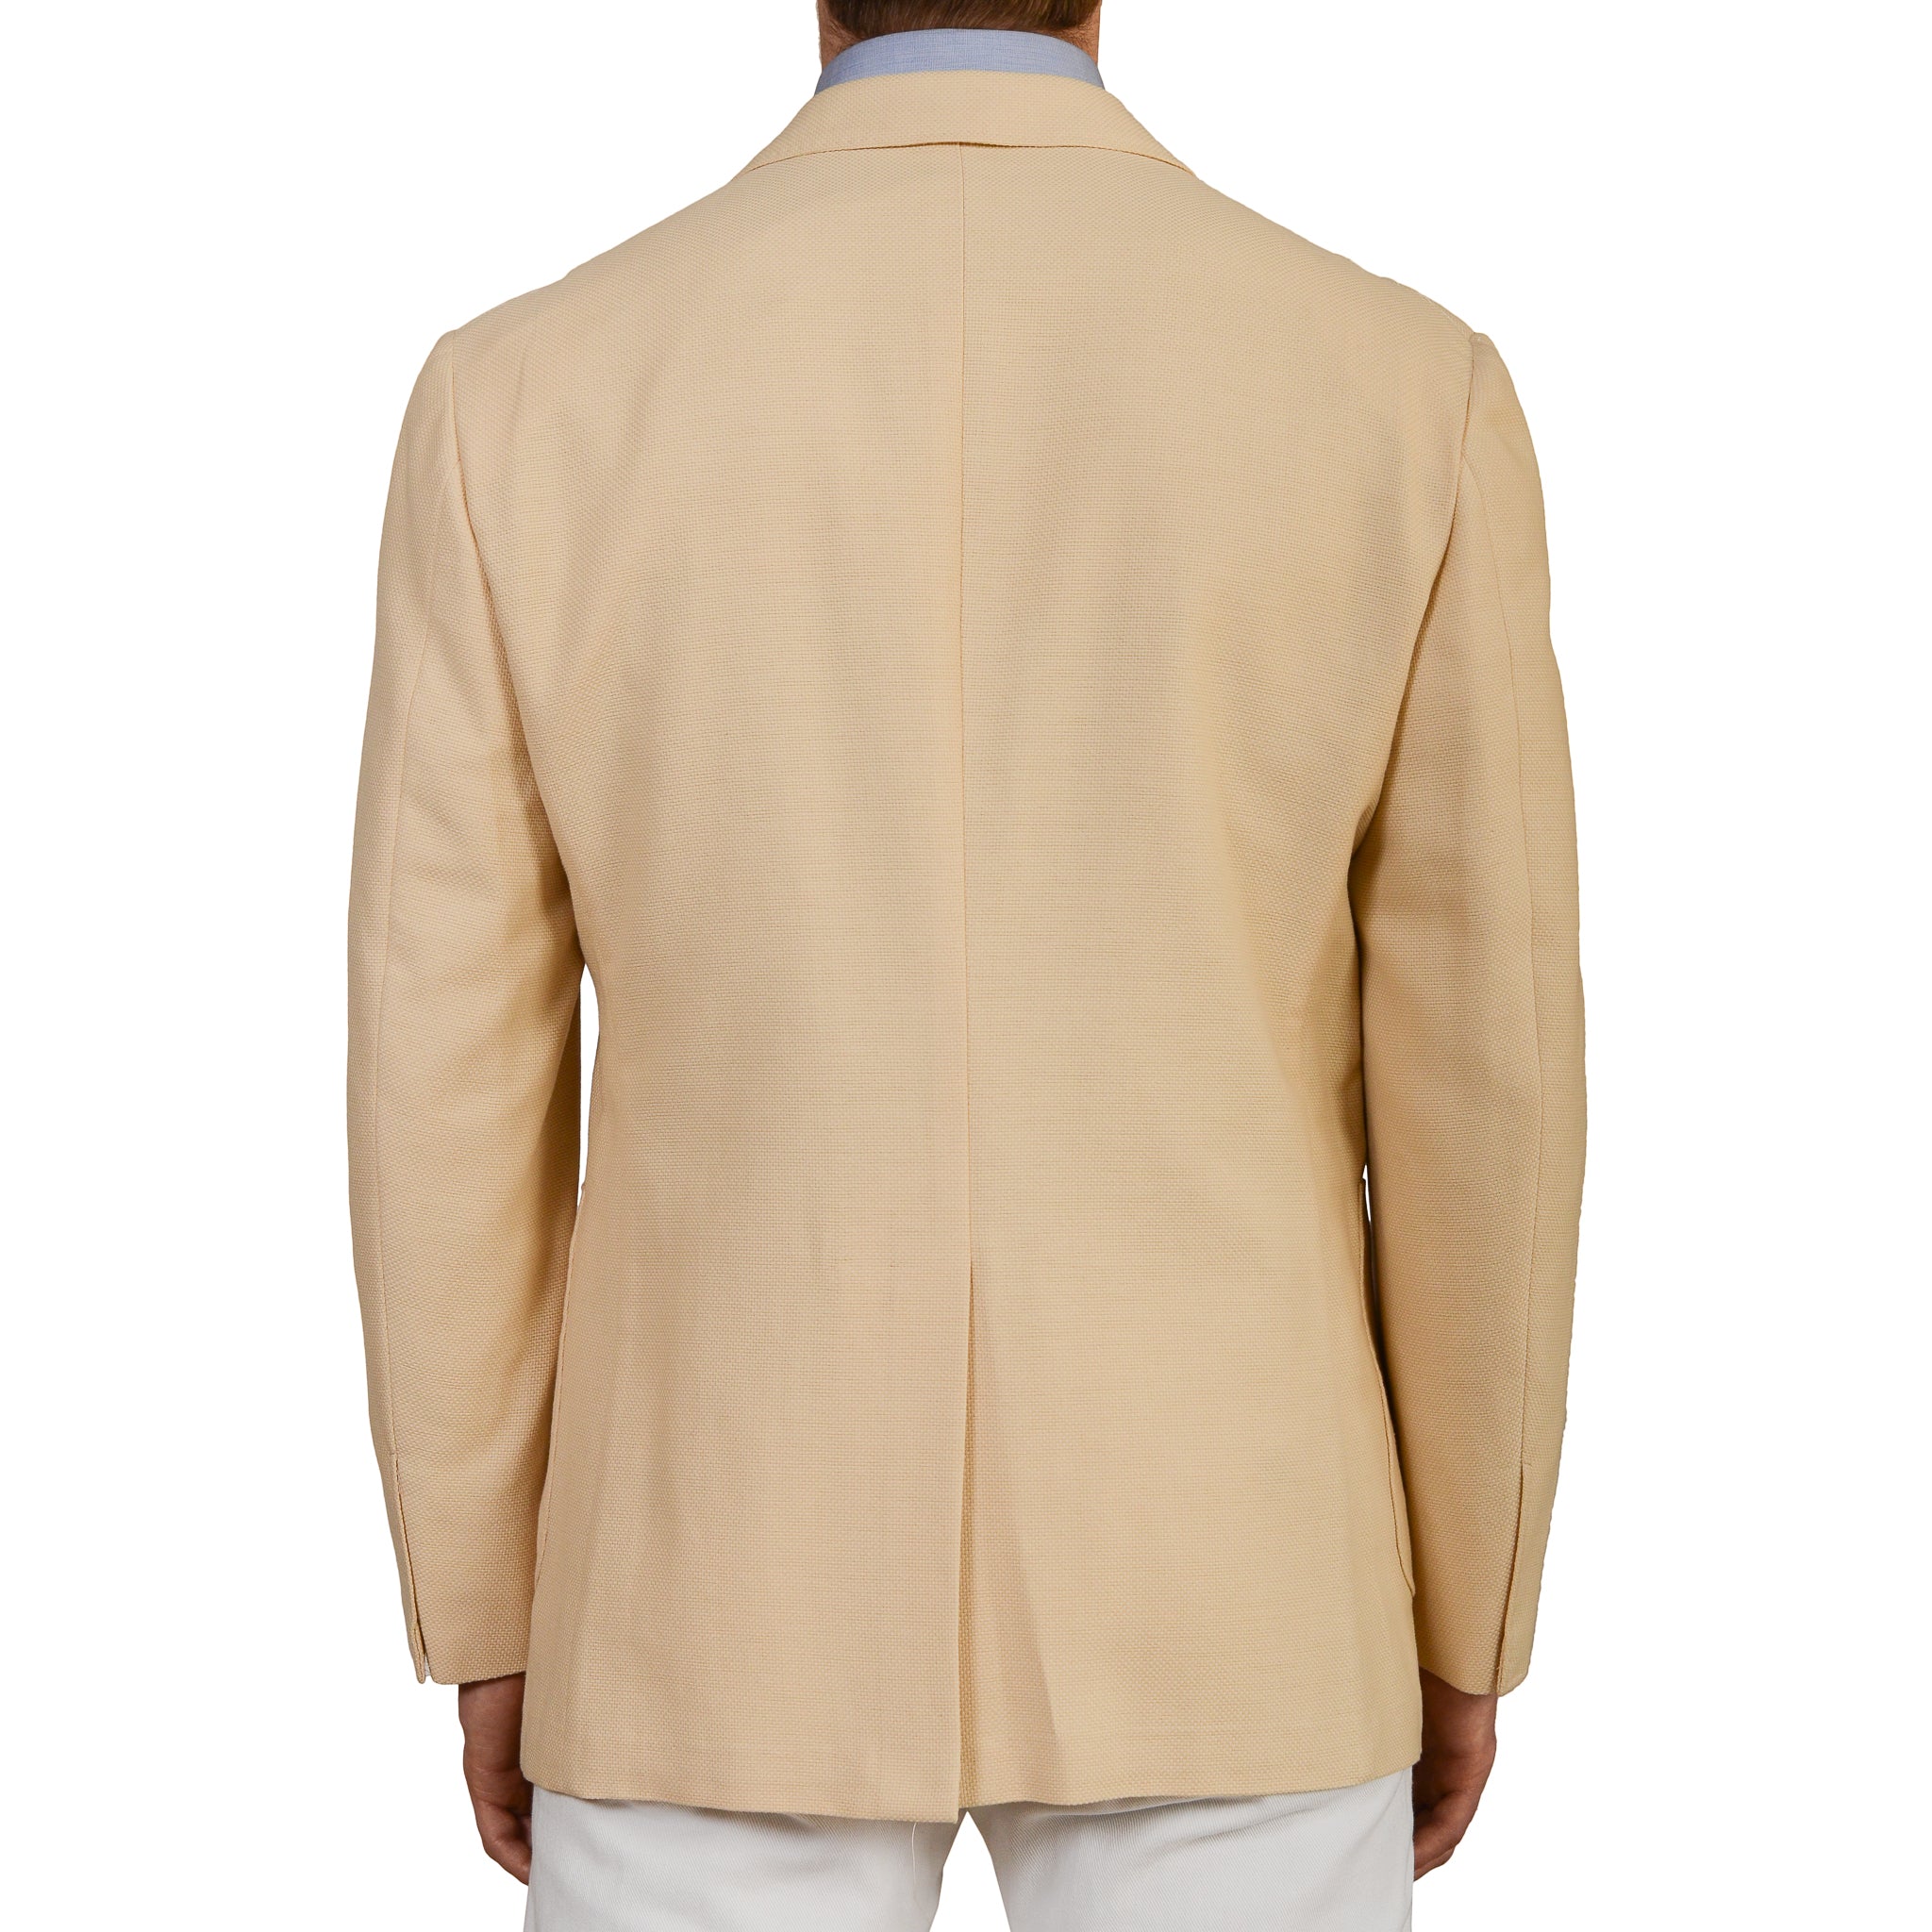 TINCATI by D'Avenza "Dakar" Hopsack Cotton Wool Blazer Jacket EU 52 NEW US 42 TINCATI